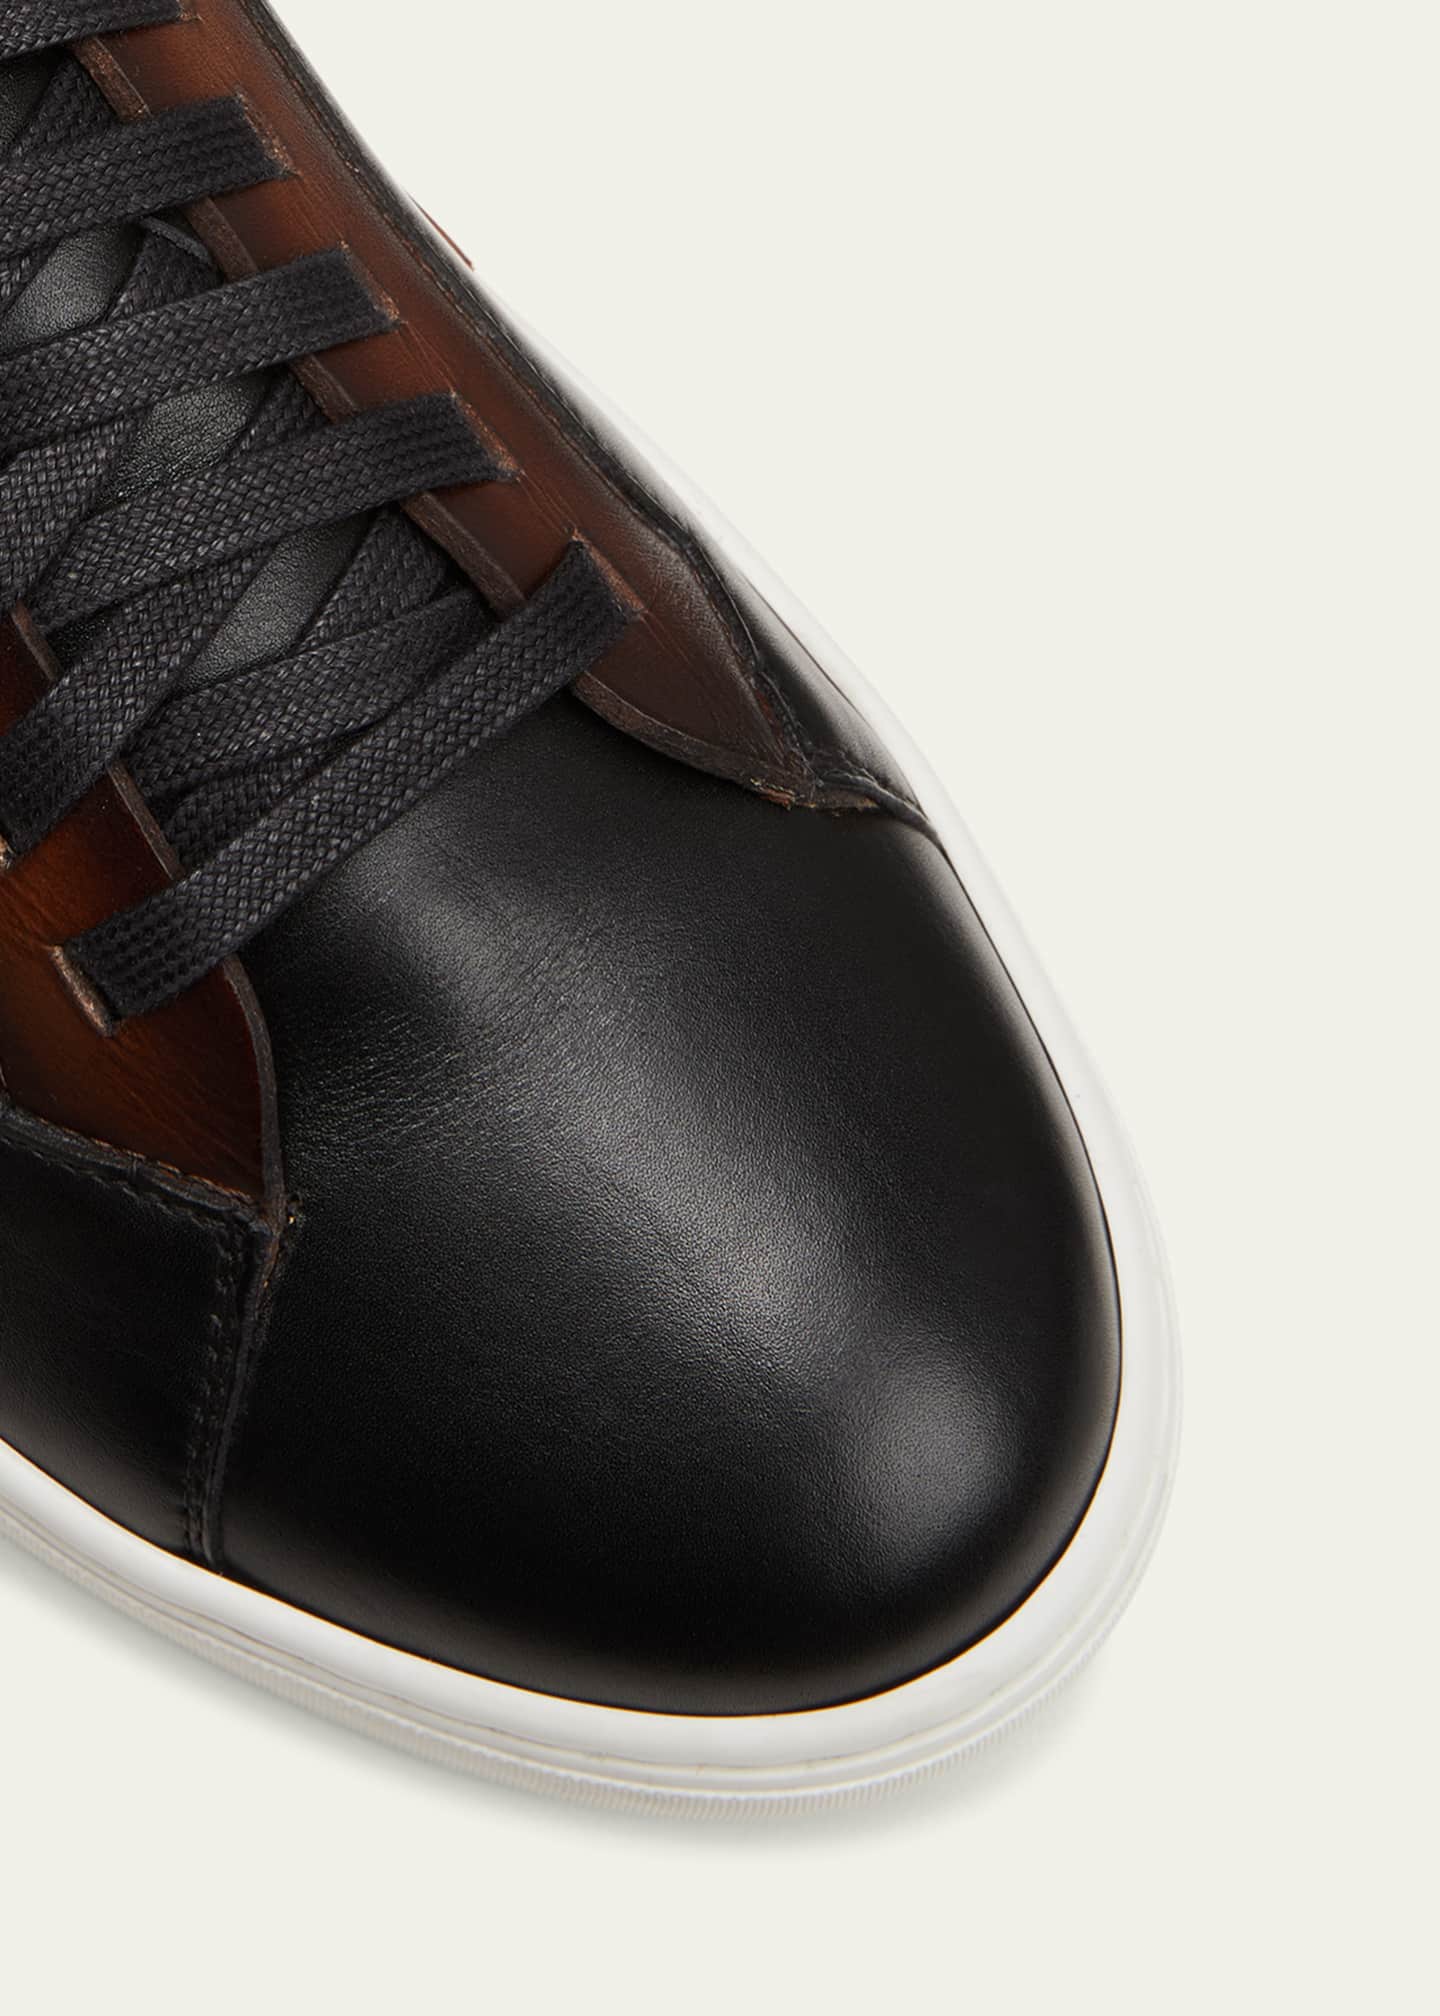 Magnanni Men's Amadeo Bicolor Leather Low-Top Sneakers - Bergdorf Goodman